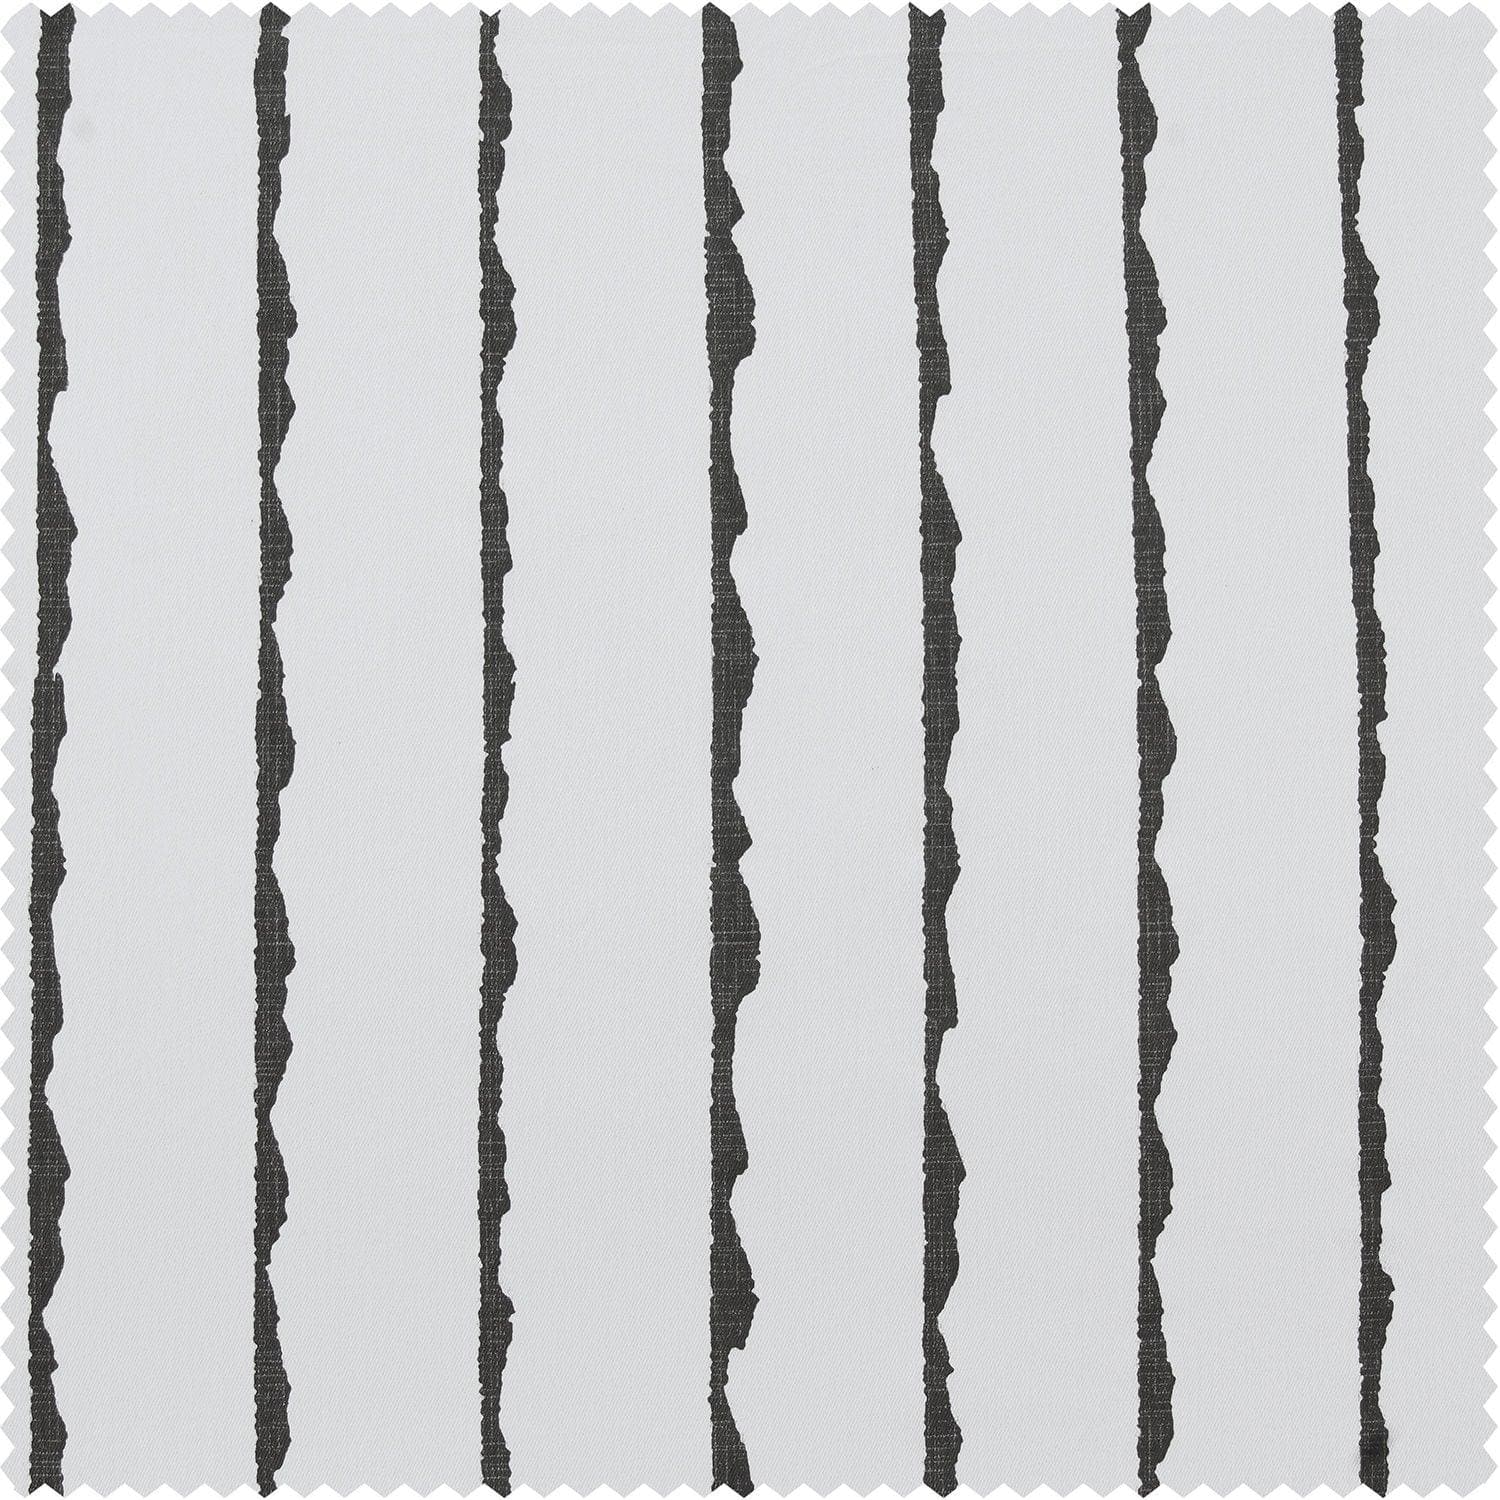 Sharkskin Black Striped Printed Cotton Tie-Up Window Shade